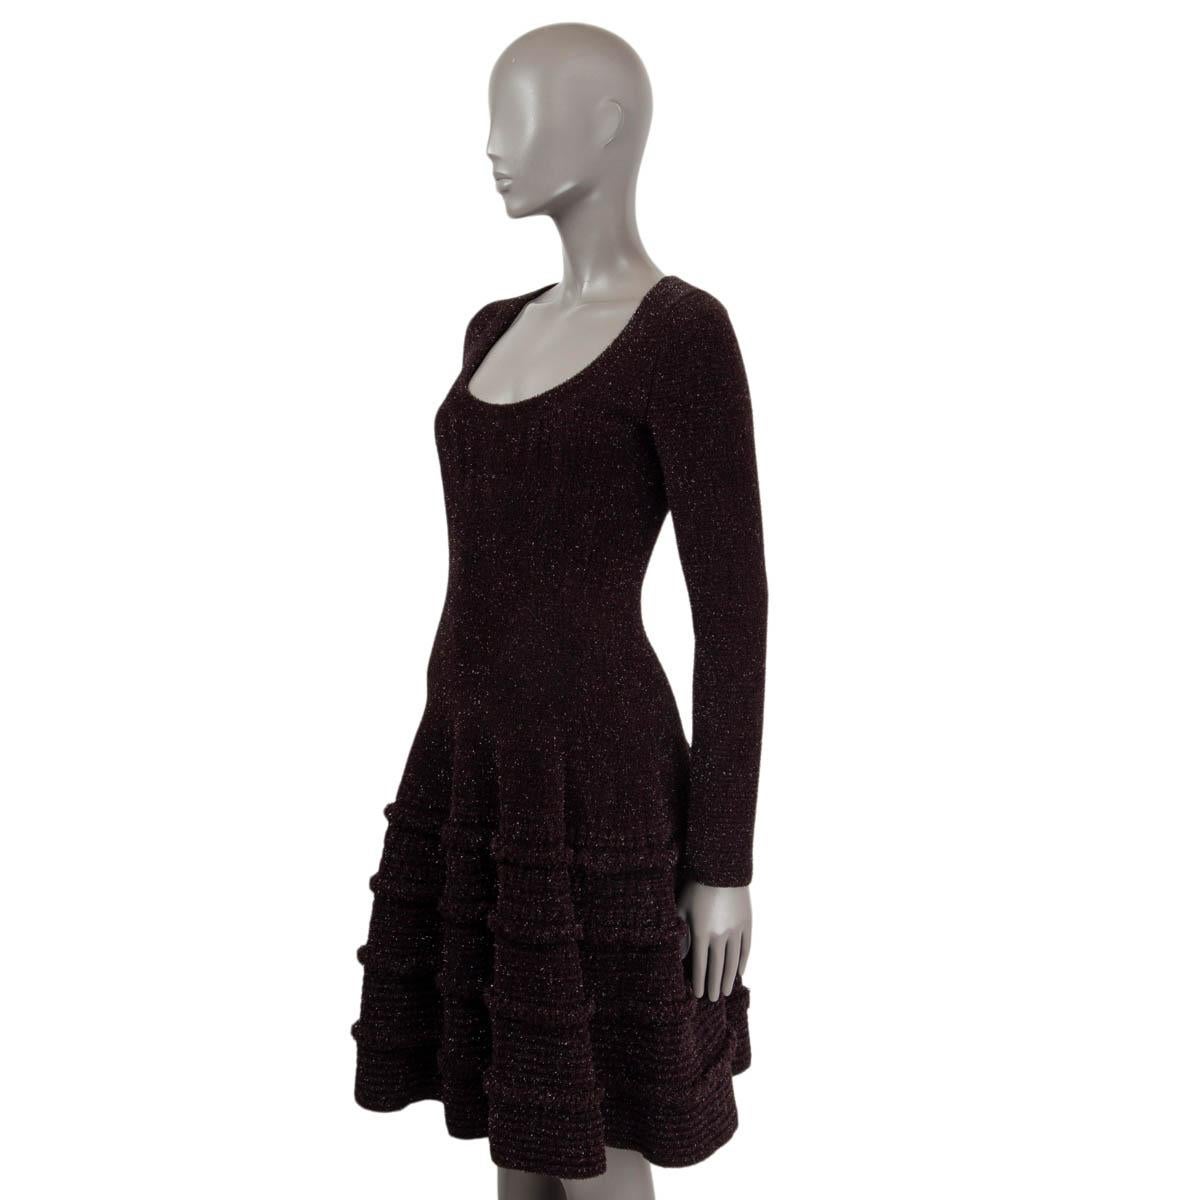 ALAIA dark brown wool blend RUFFLED LUREX KNIT Dress 42 L In Excellent Condition For Sale In Zürich, CH